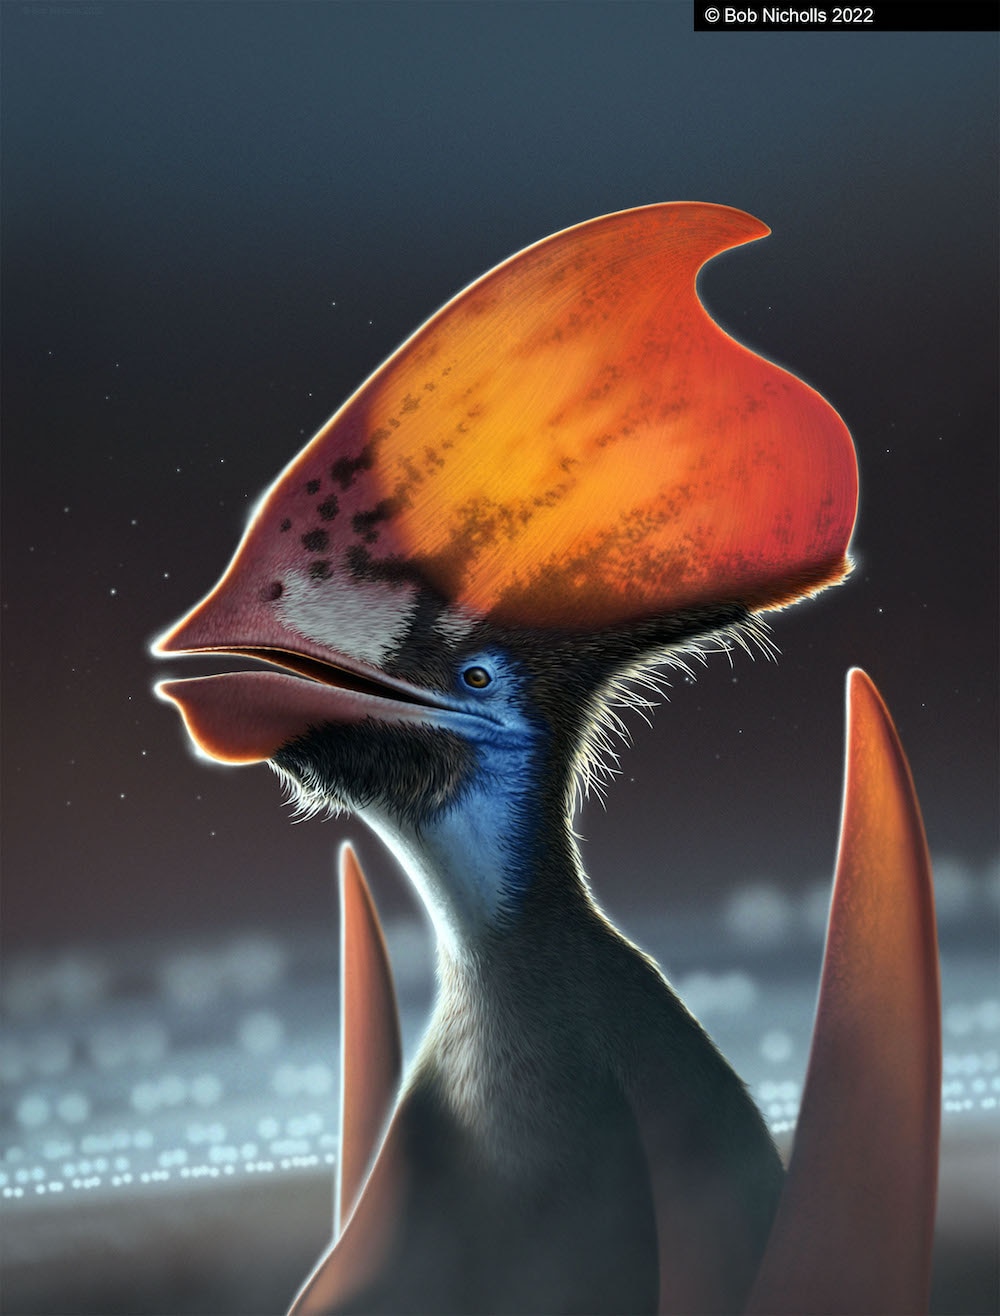 Pterosaurs were prehistoric flying chameleons that could change color